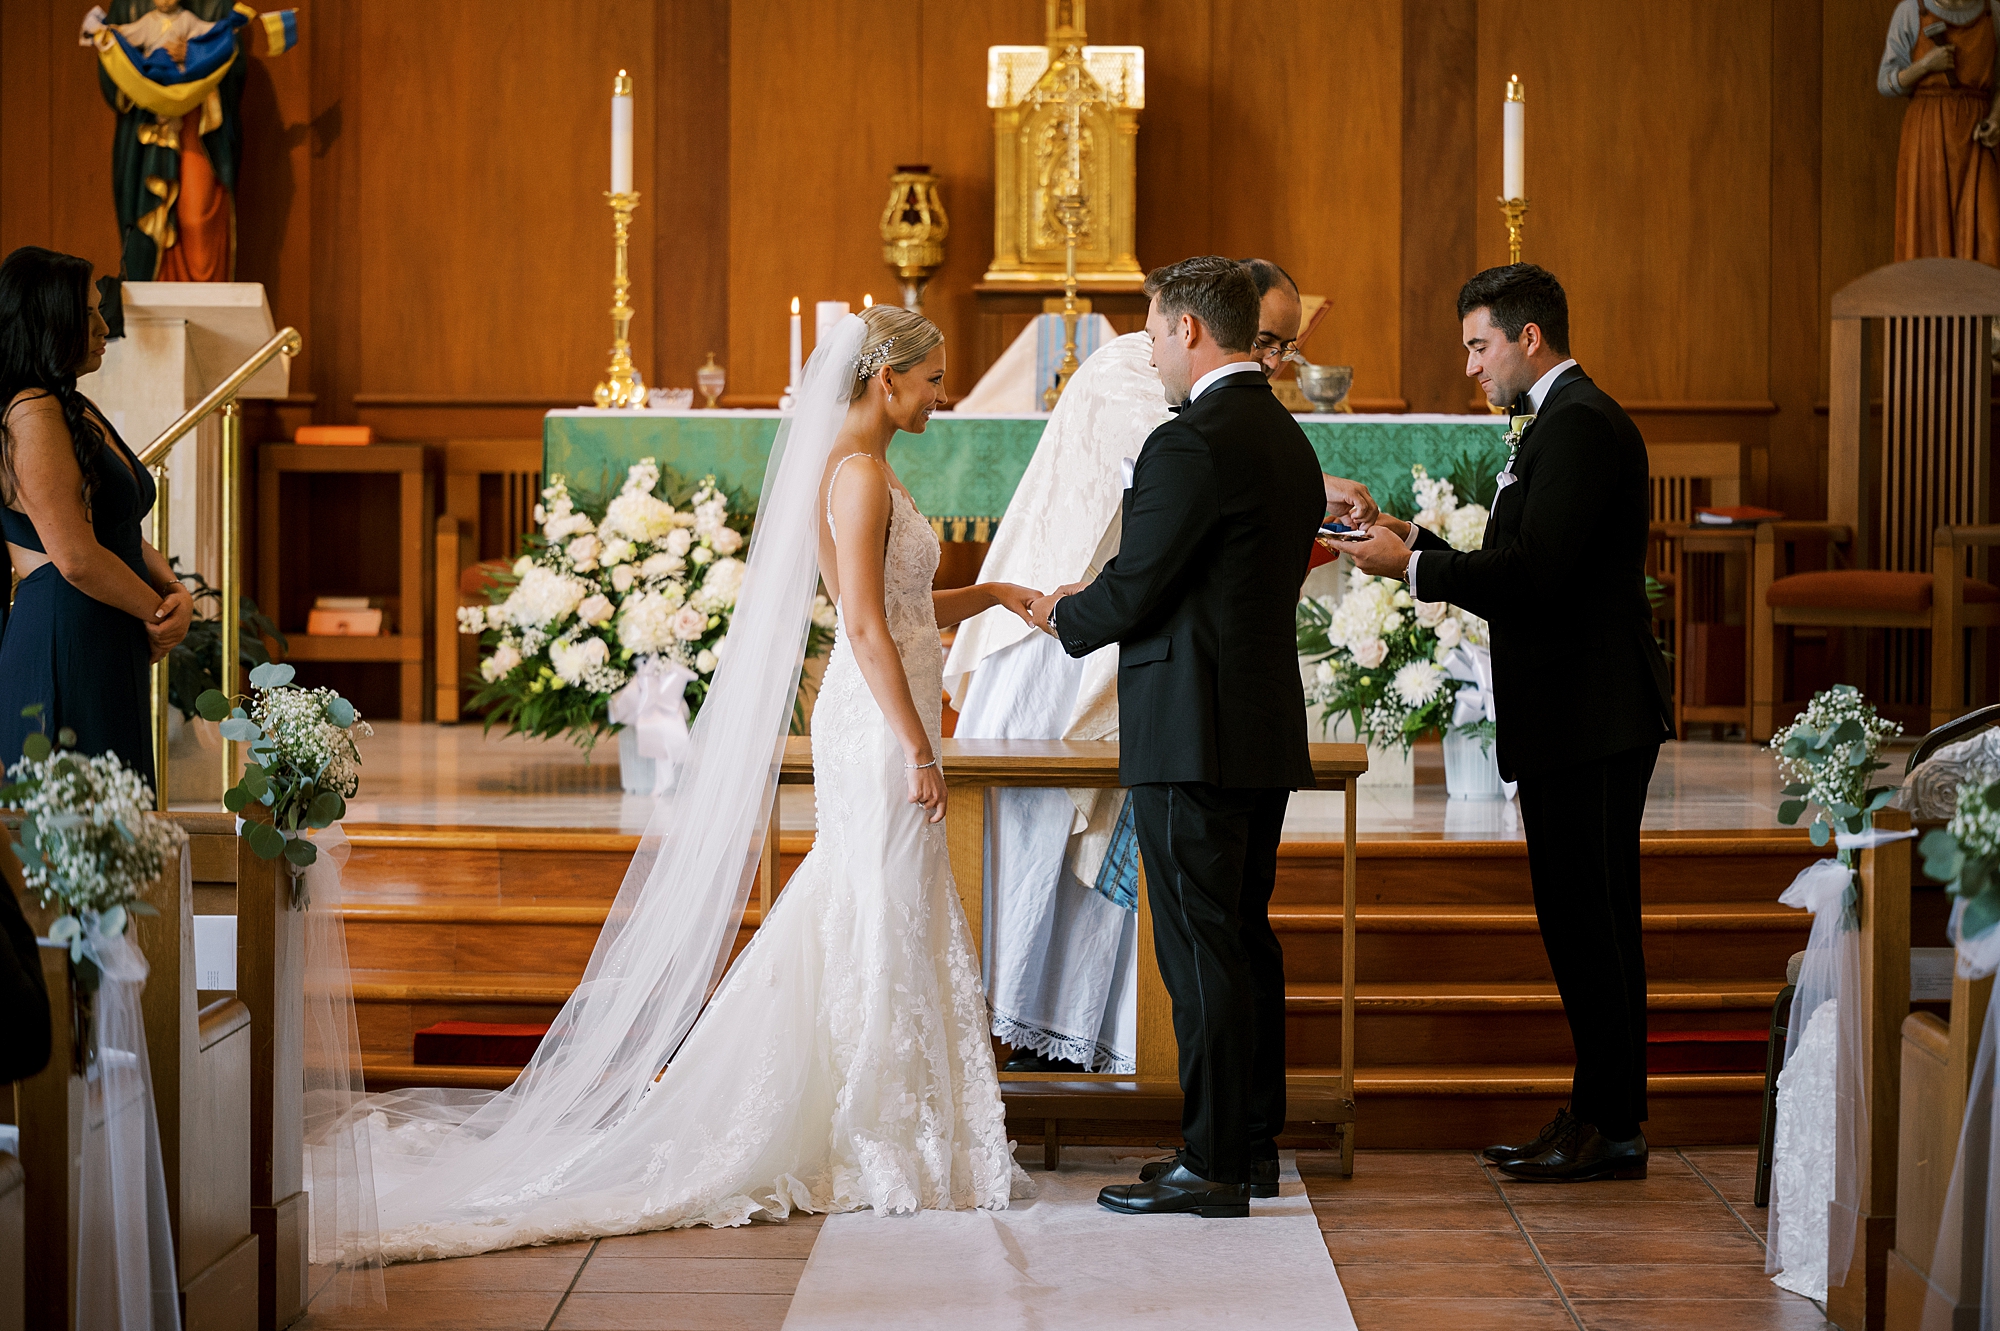 newlyweds exchange rings during traditional Catholic Church wedding at St. Augustine Catholic Church